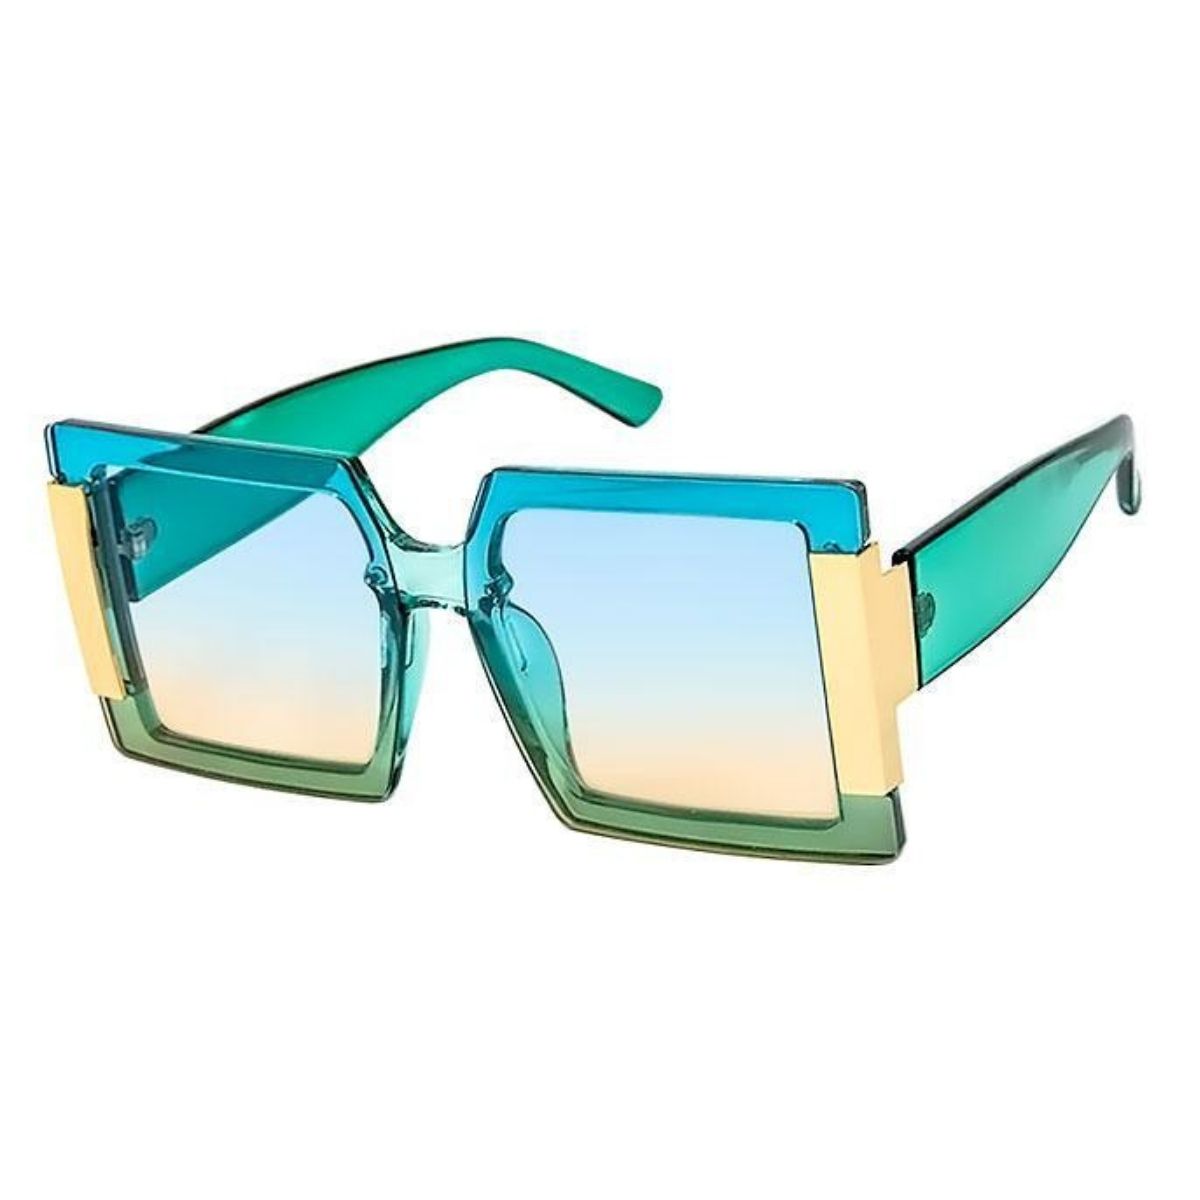 Aqua Shiny Gold Temple Sunglasses